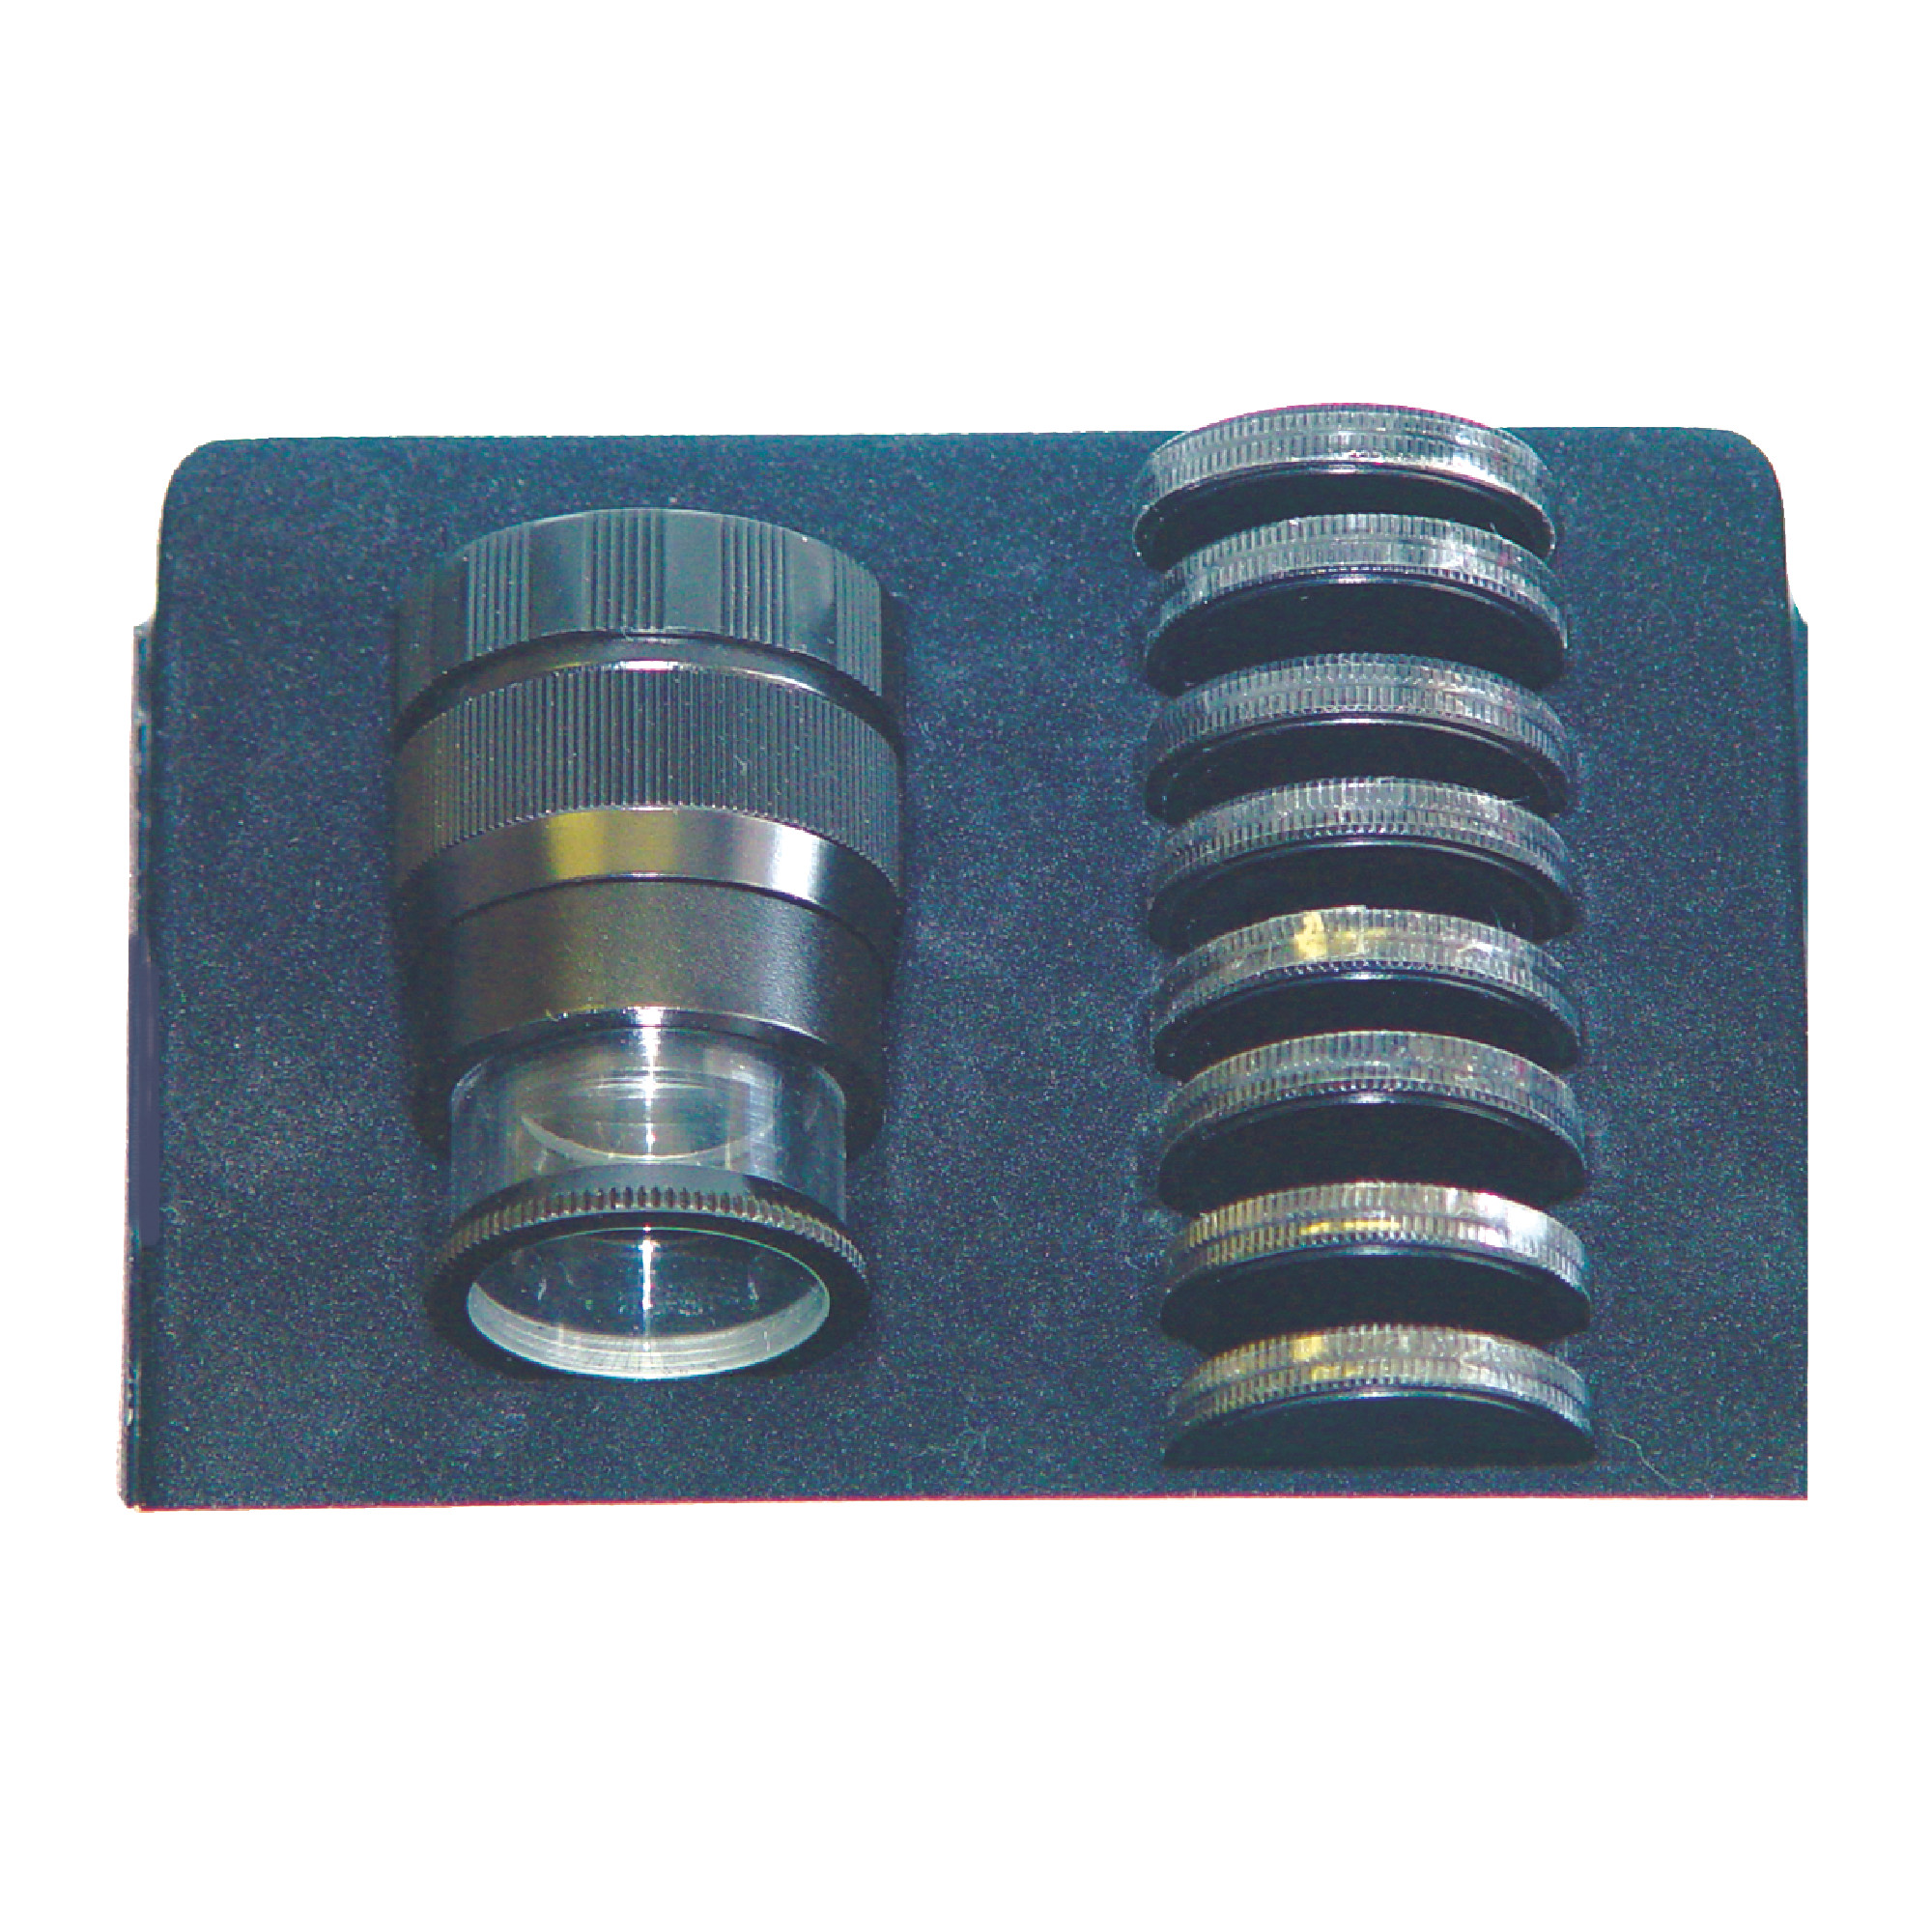 10X Pocket Optical Comparator Set